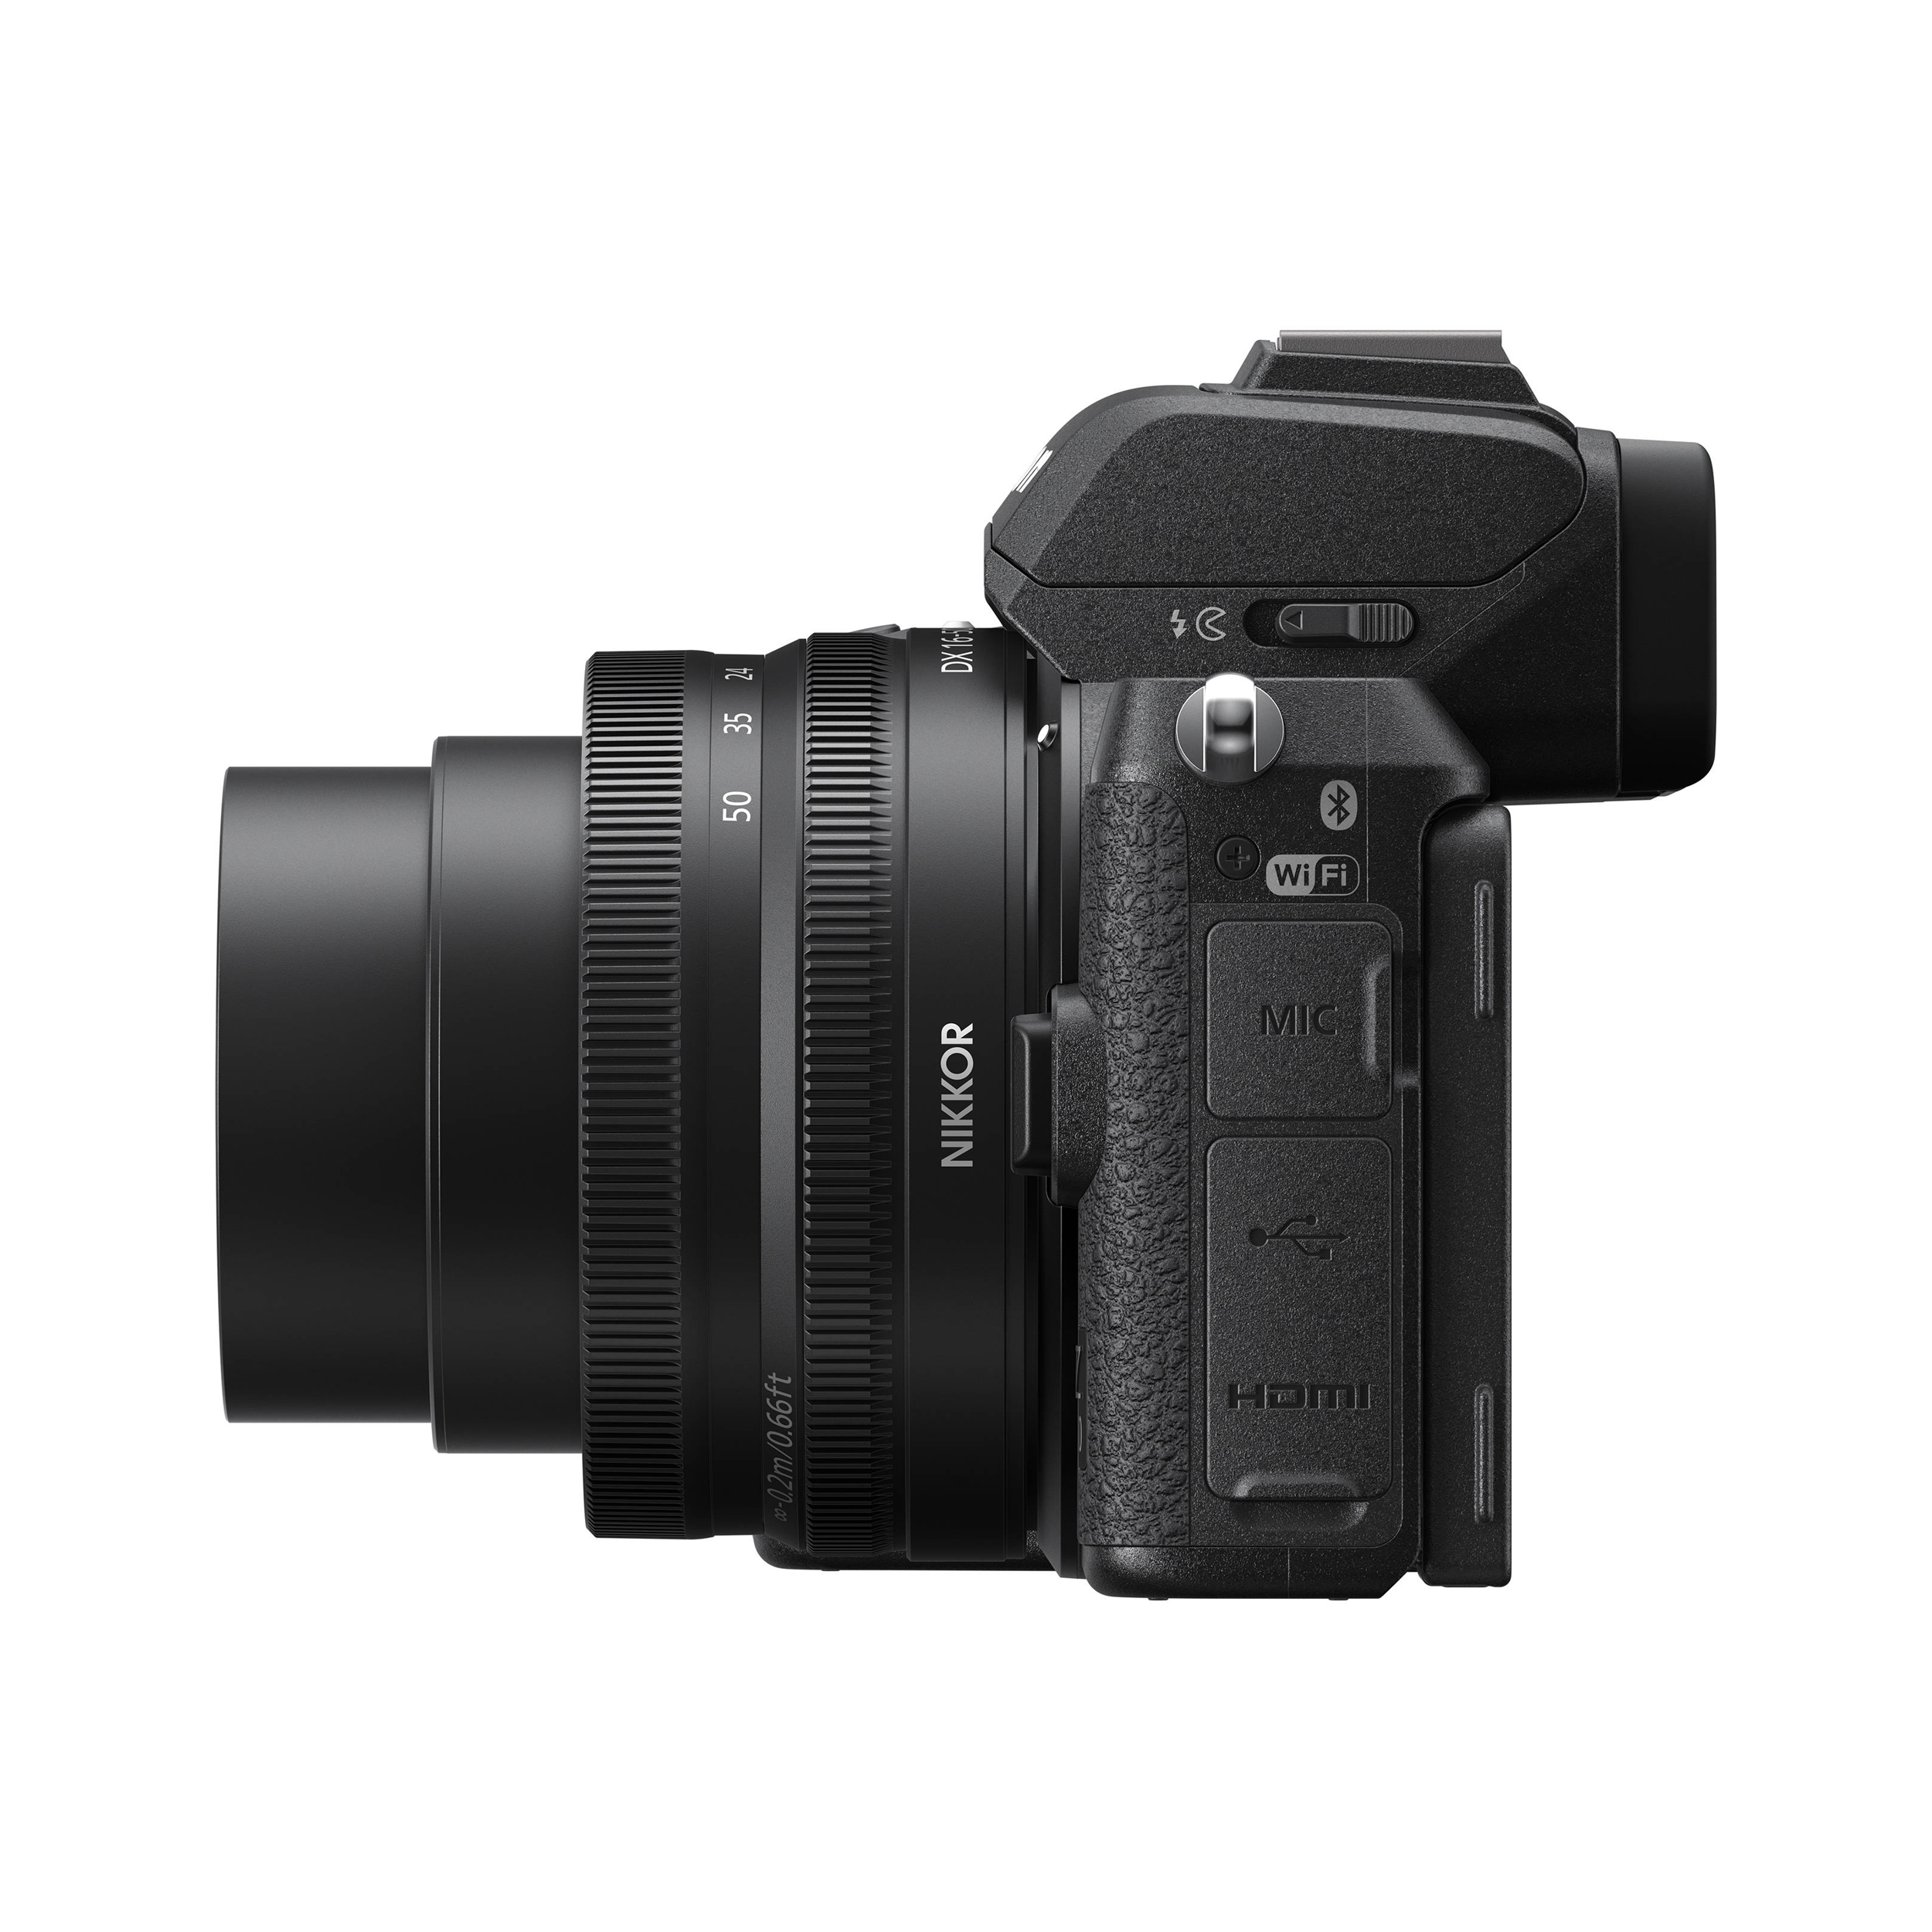 Nikon Z50 Mirrorless Camera with 16-50mm Lens